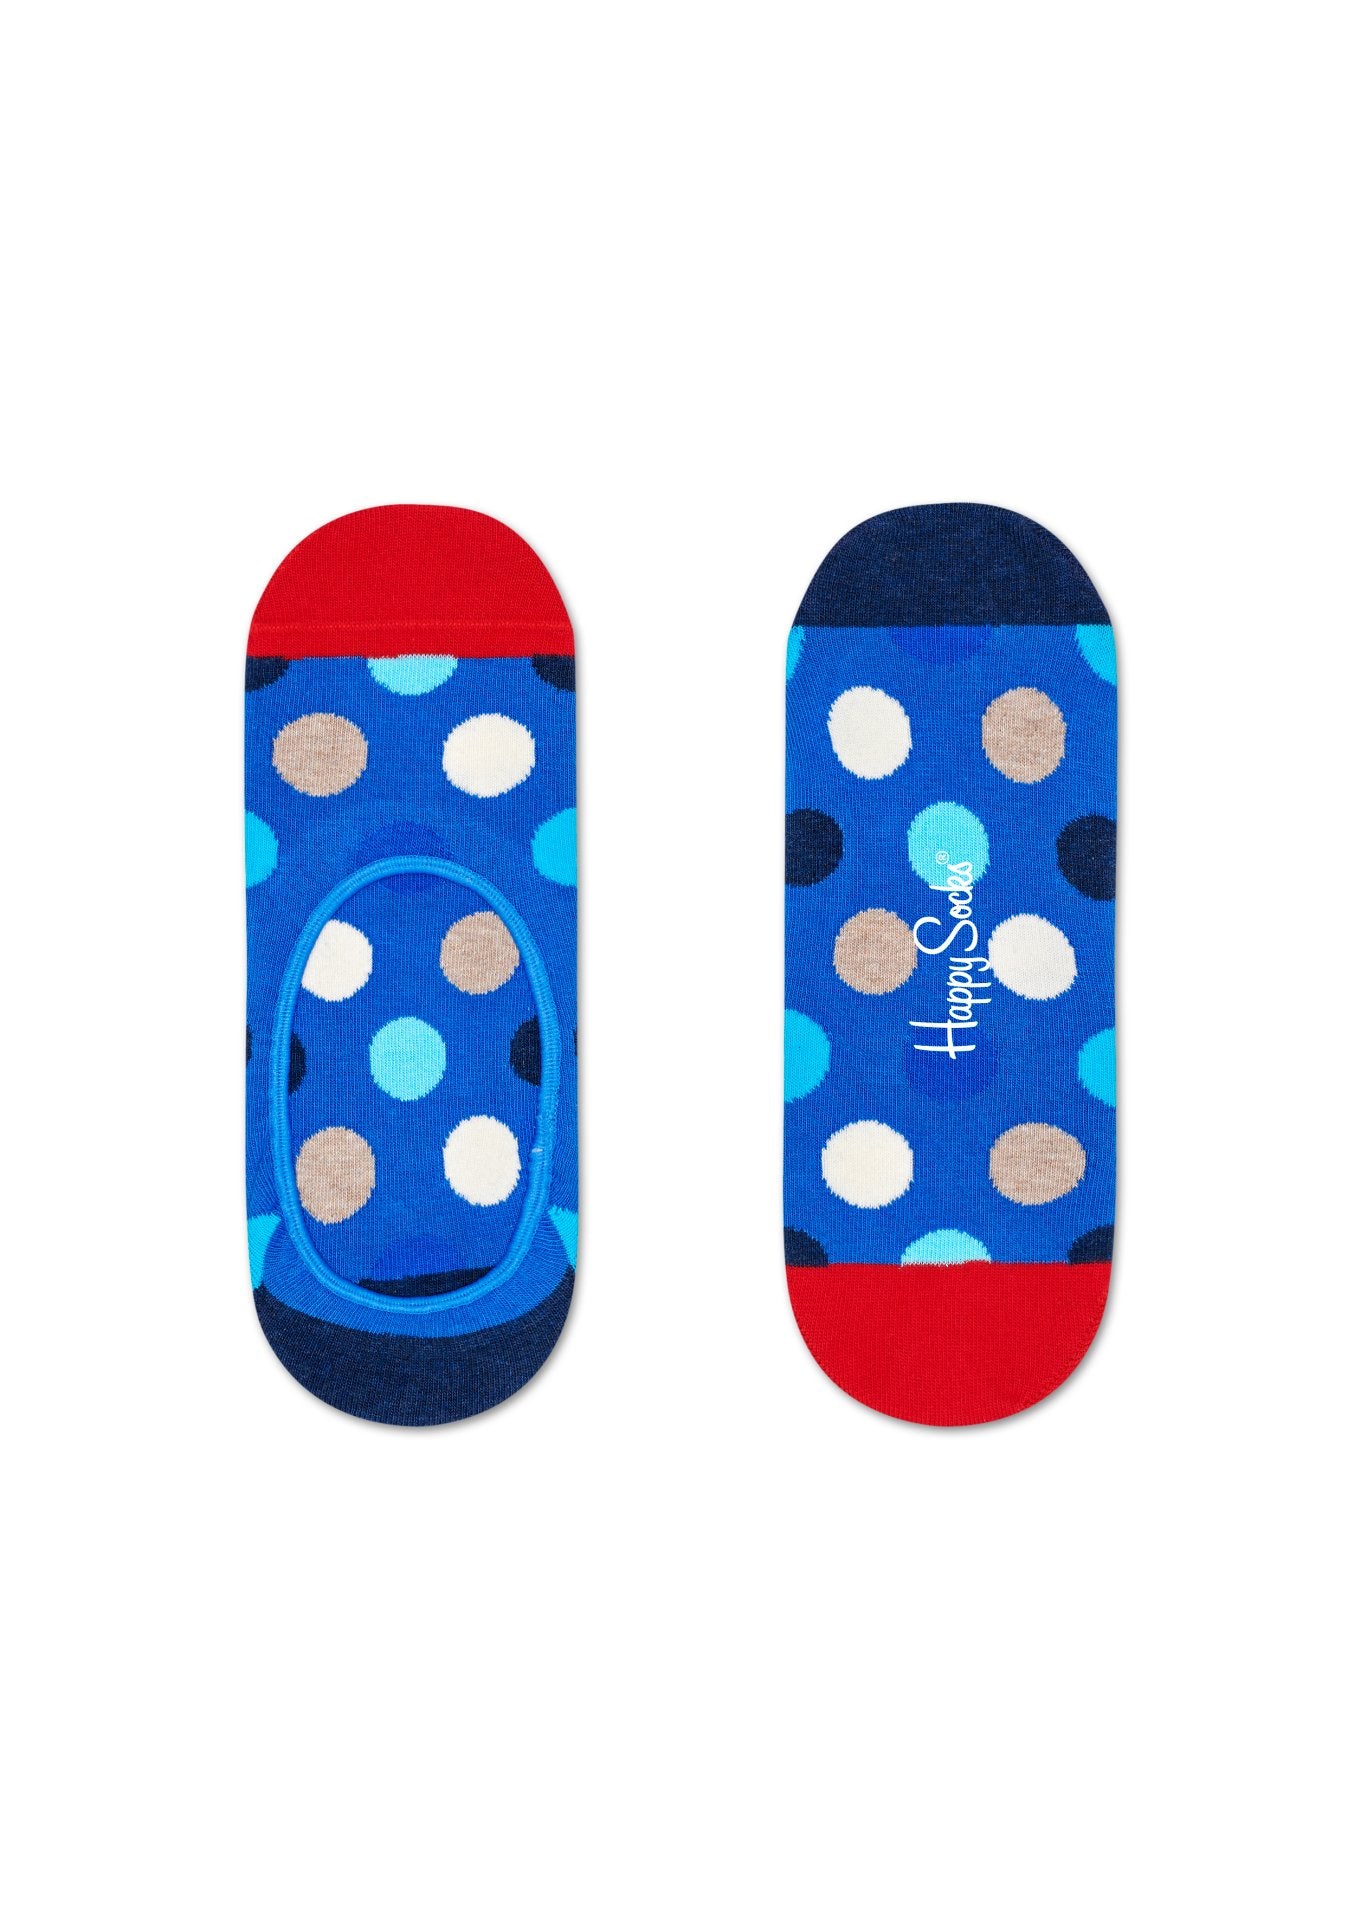 Nízke modré ponožky Happy Socks s bodkami, vzor Big Dot